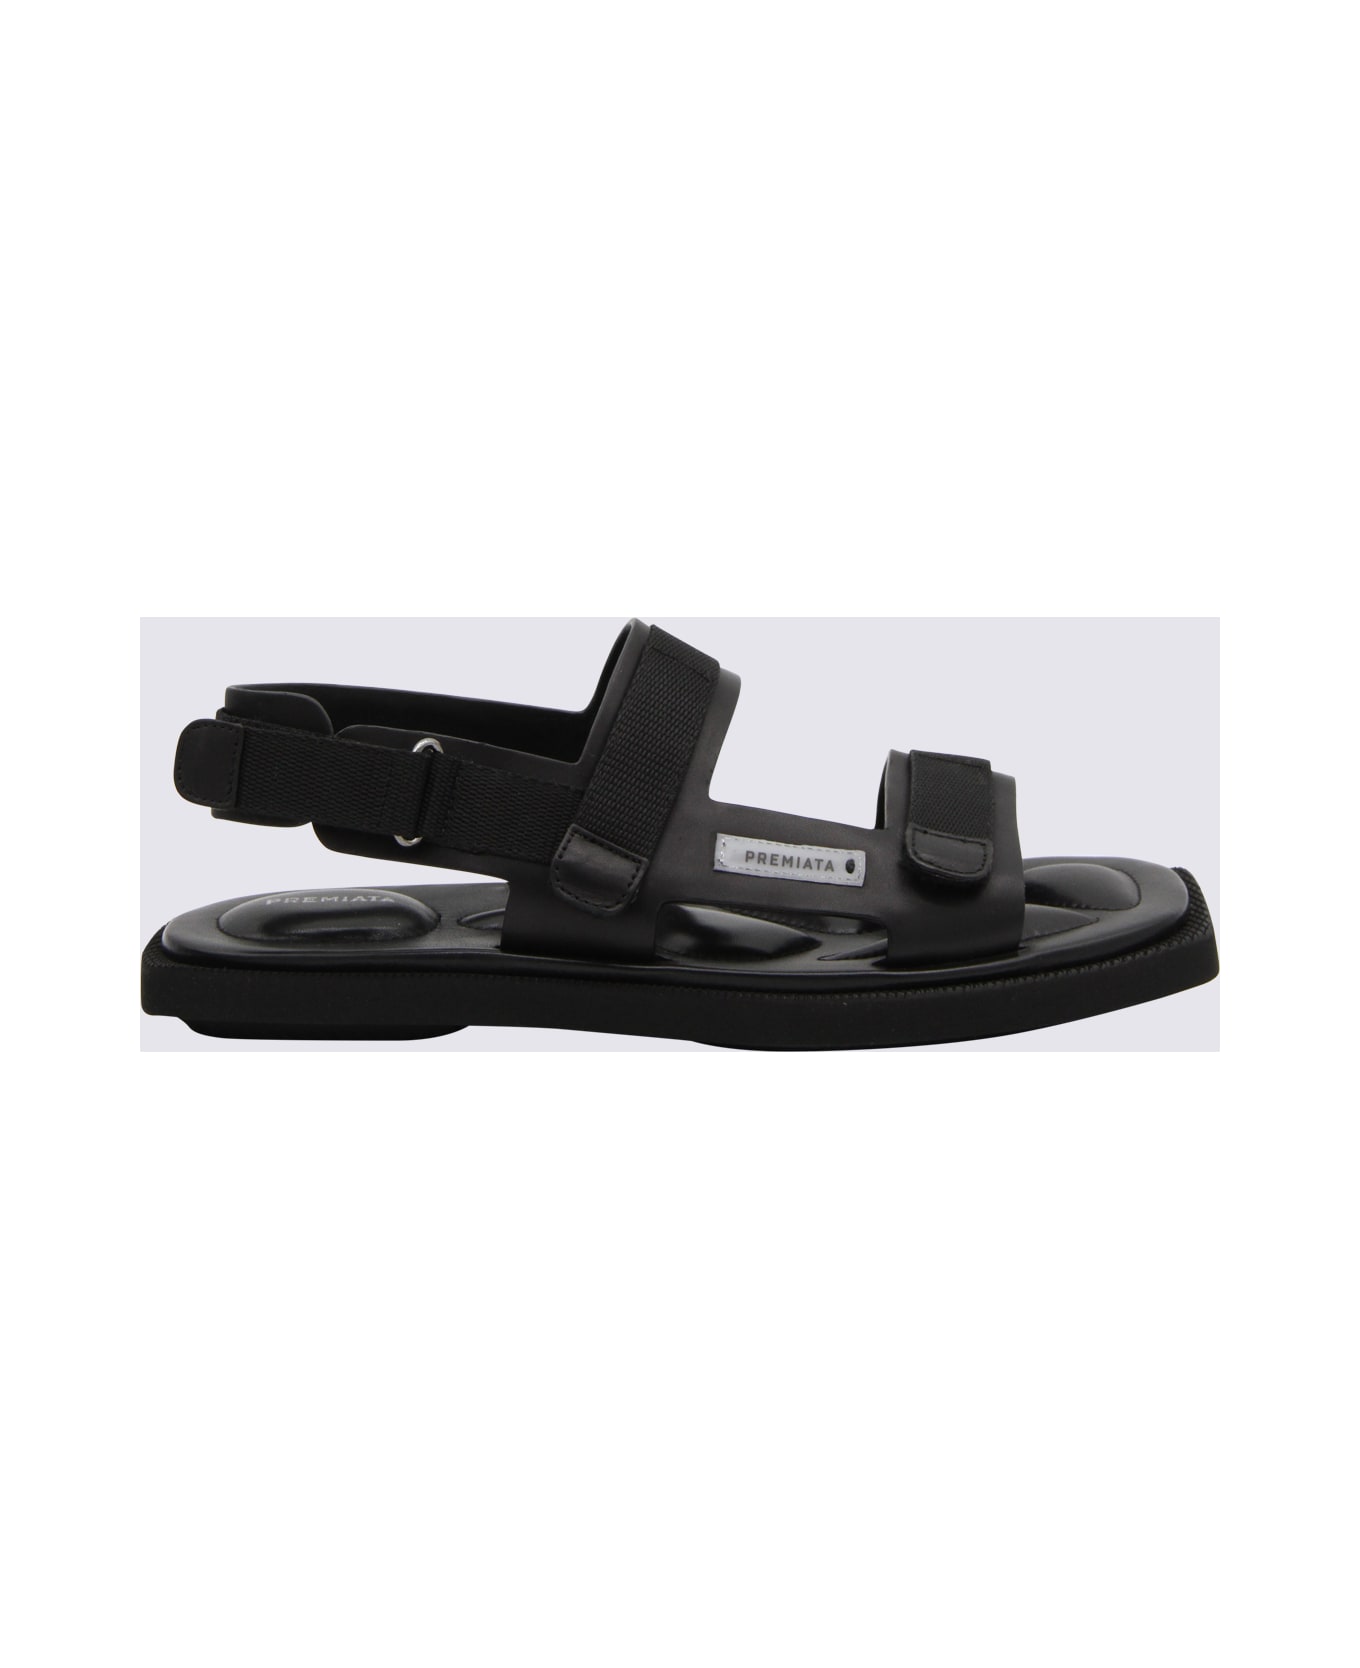 Premiata Black Leather Strap Sandals - Black